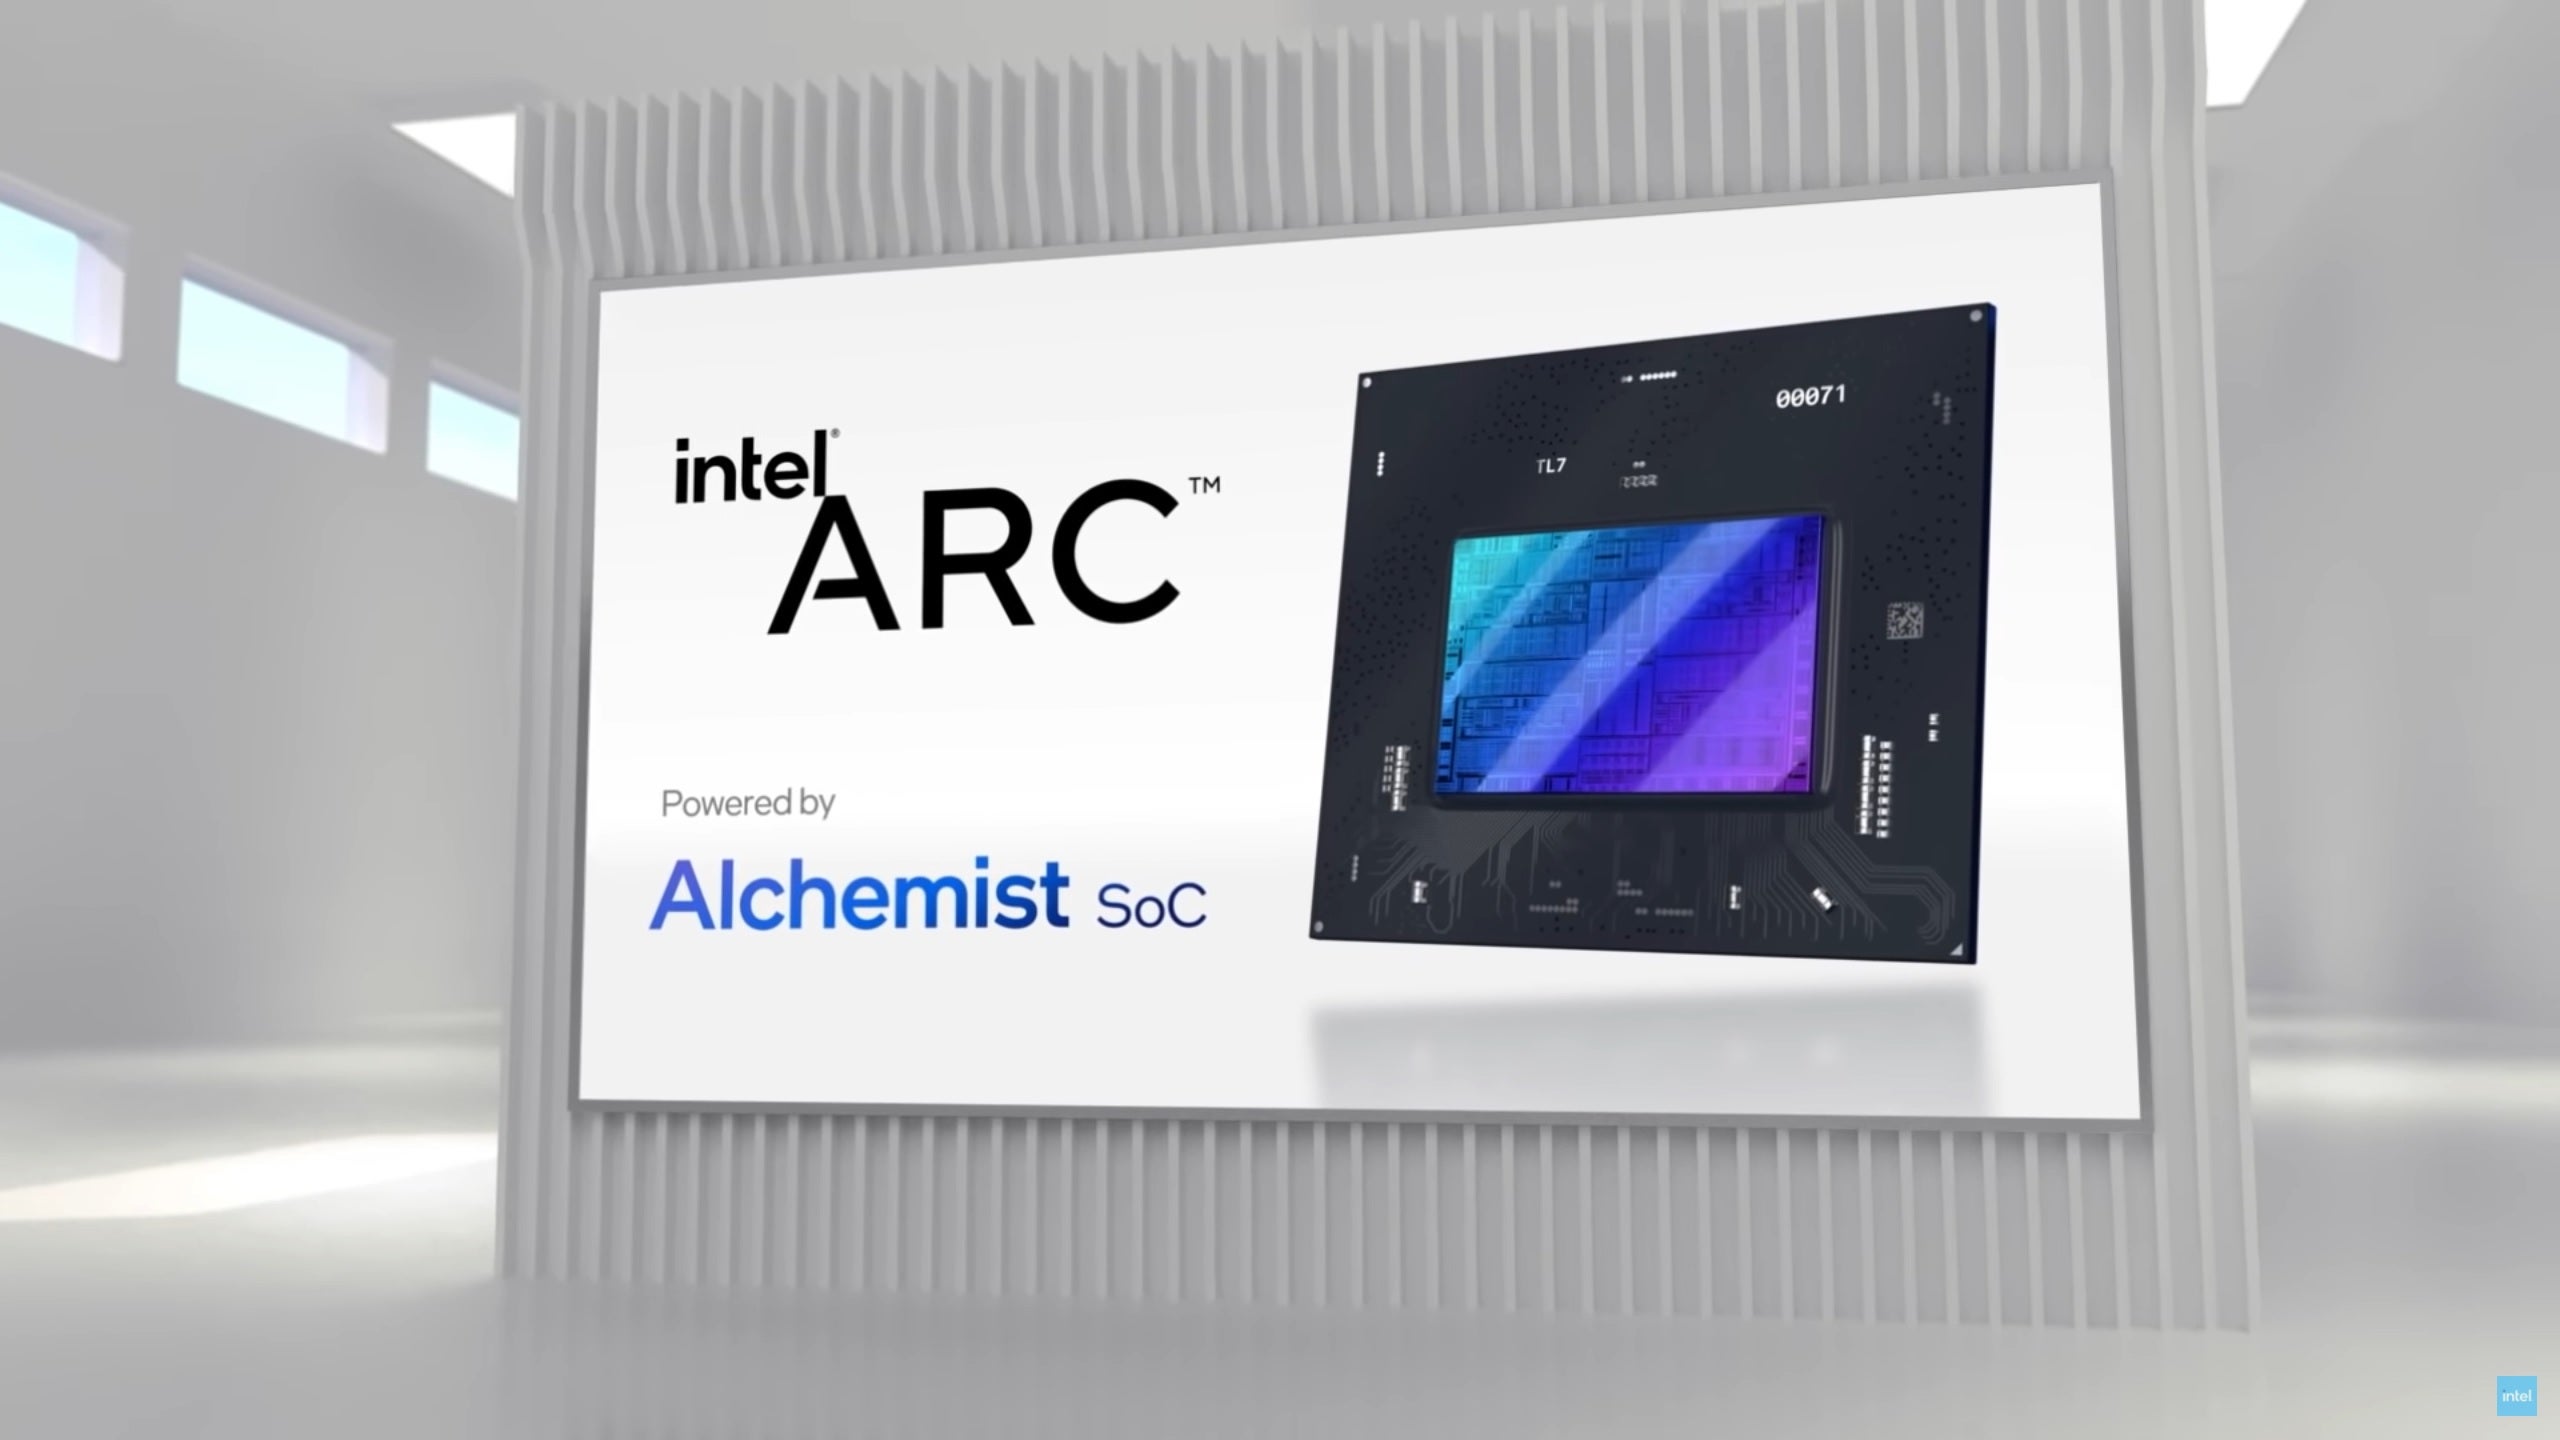 A promotional image of Intel's Alchemist-based Arc GPU.